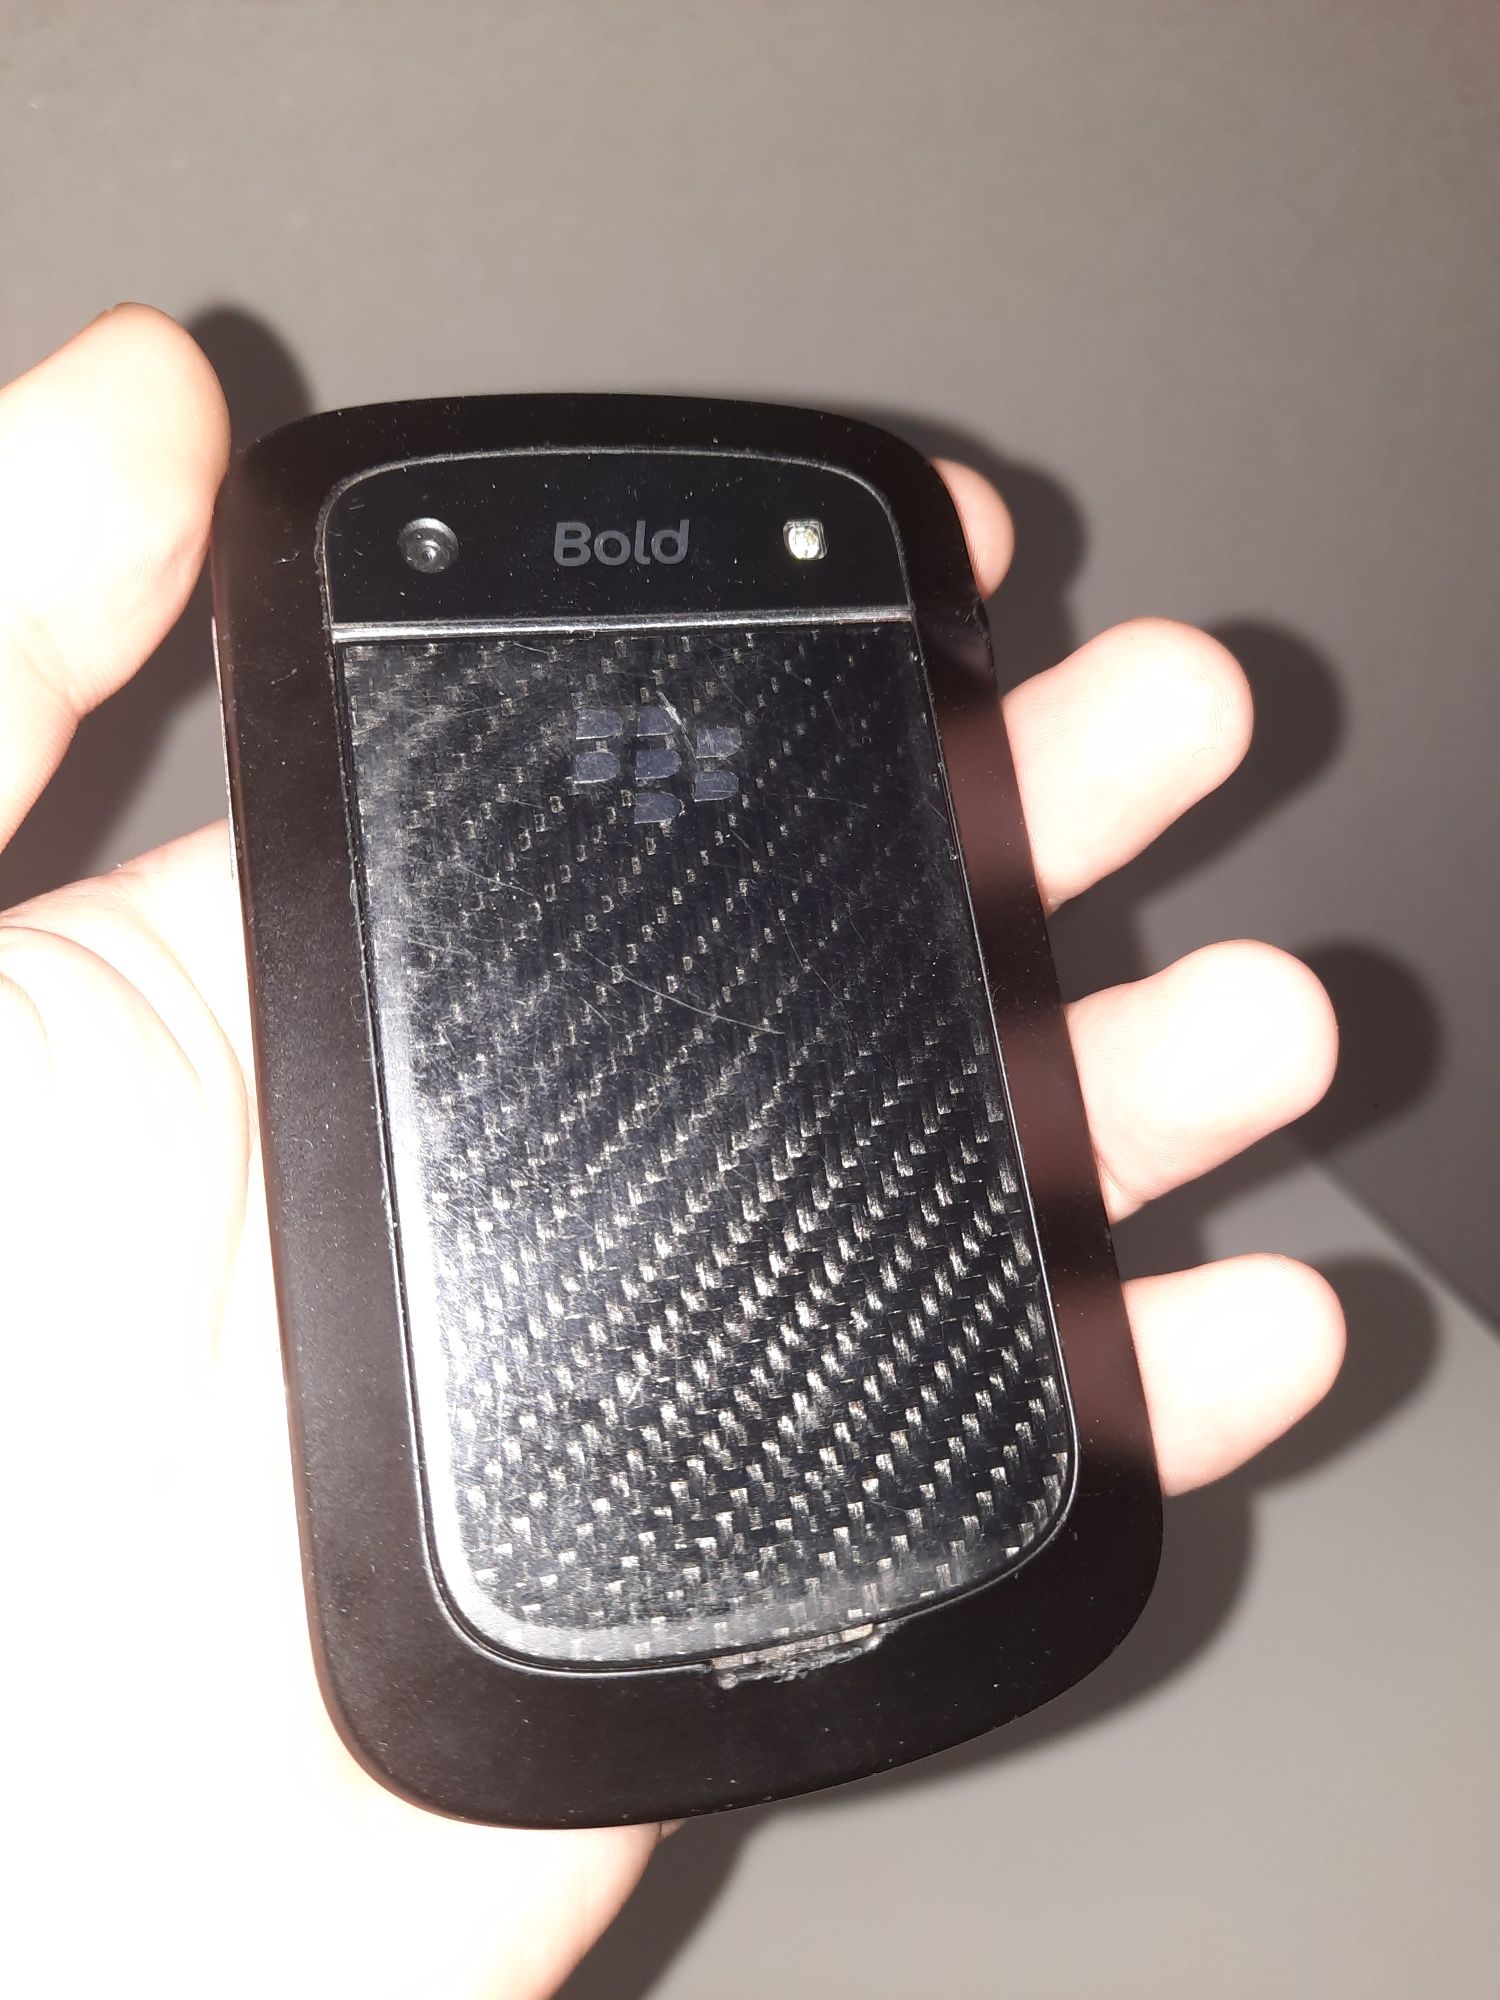 Blackberry9900bold